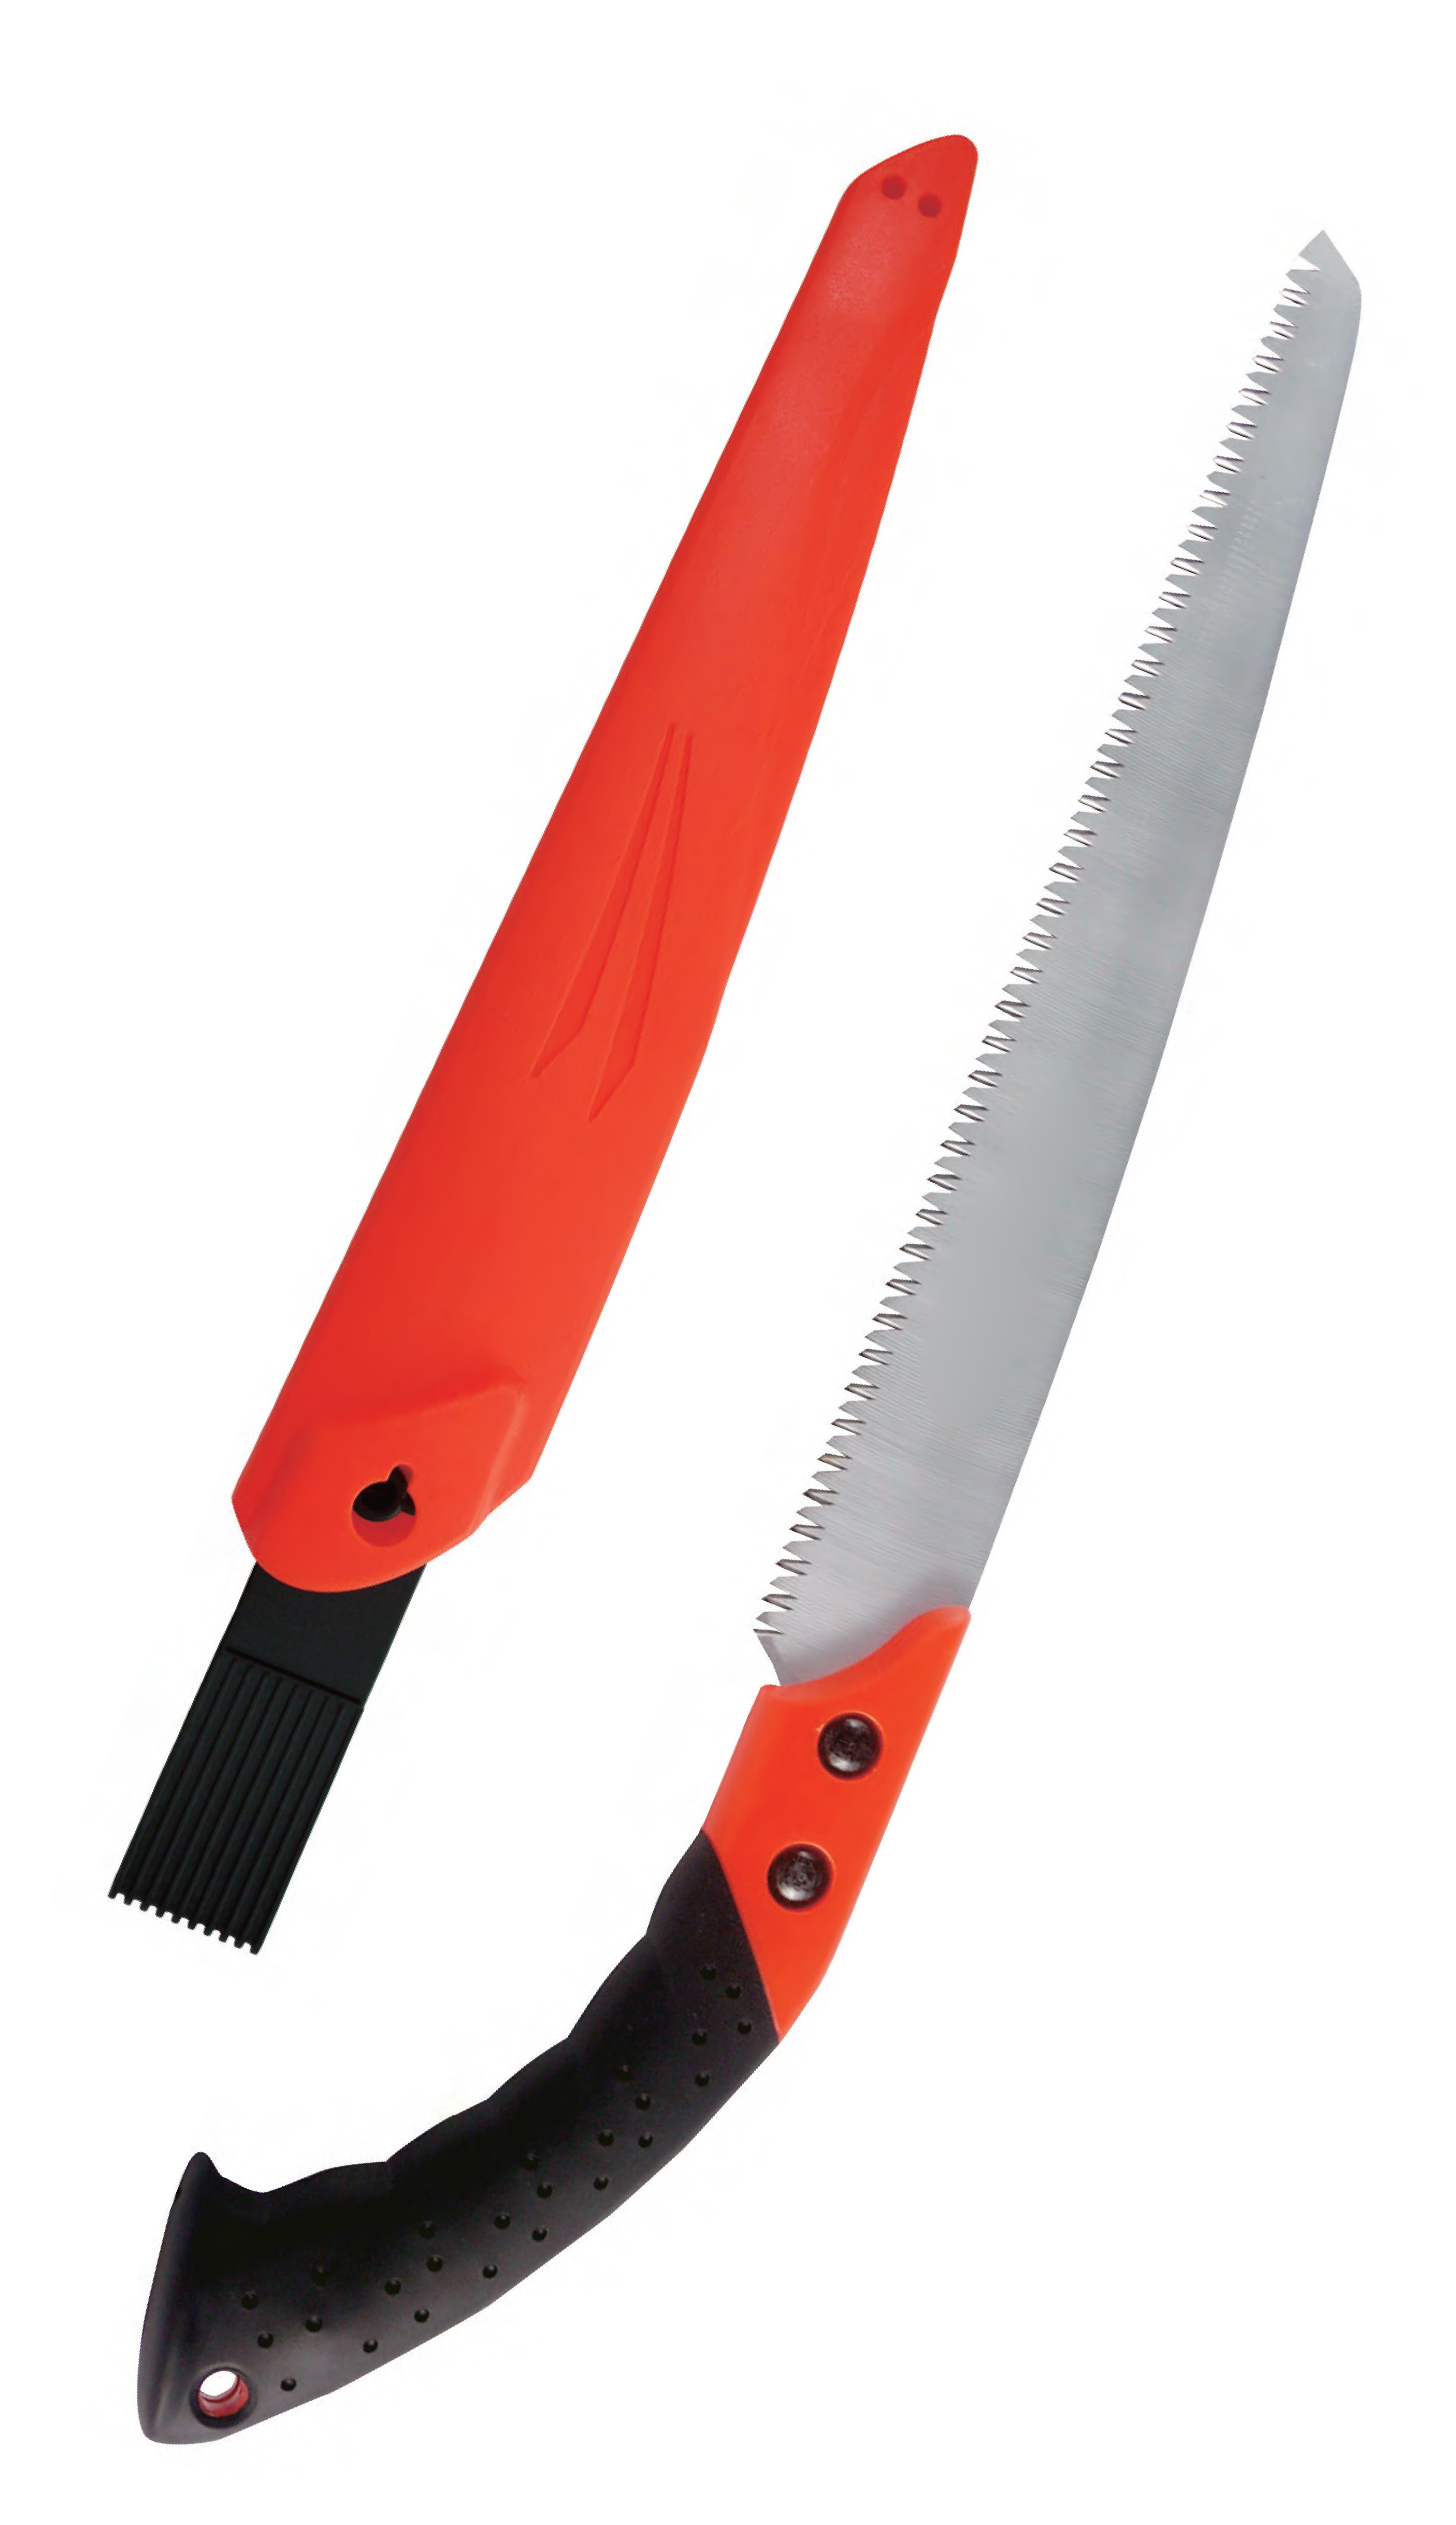 Zenport Saw S250, 10-inch saw, pruning saw, tri-edge, sk5 japanese steel, sheath